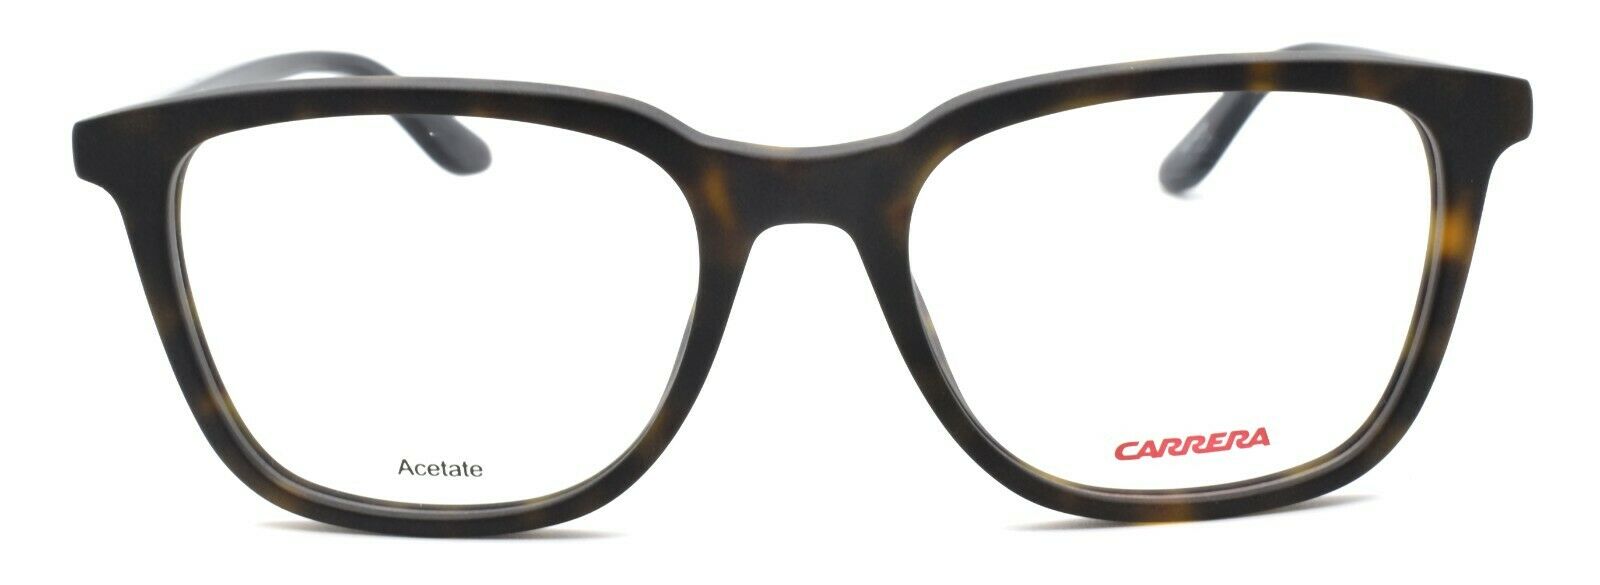 2-Carrera CA6641 KWZ Men's Eyeglasses Frames 51-18-145 Havana / Grey + CASE-762753908179-IKSpecs